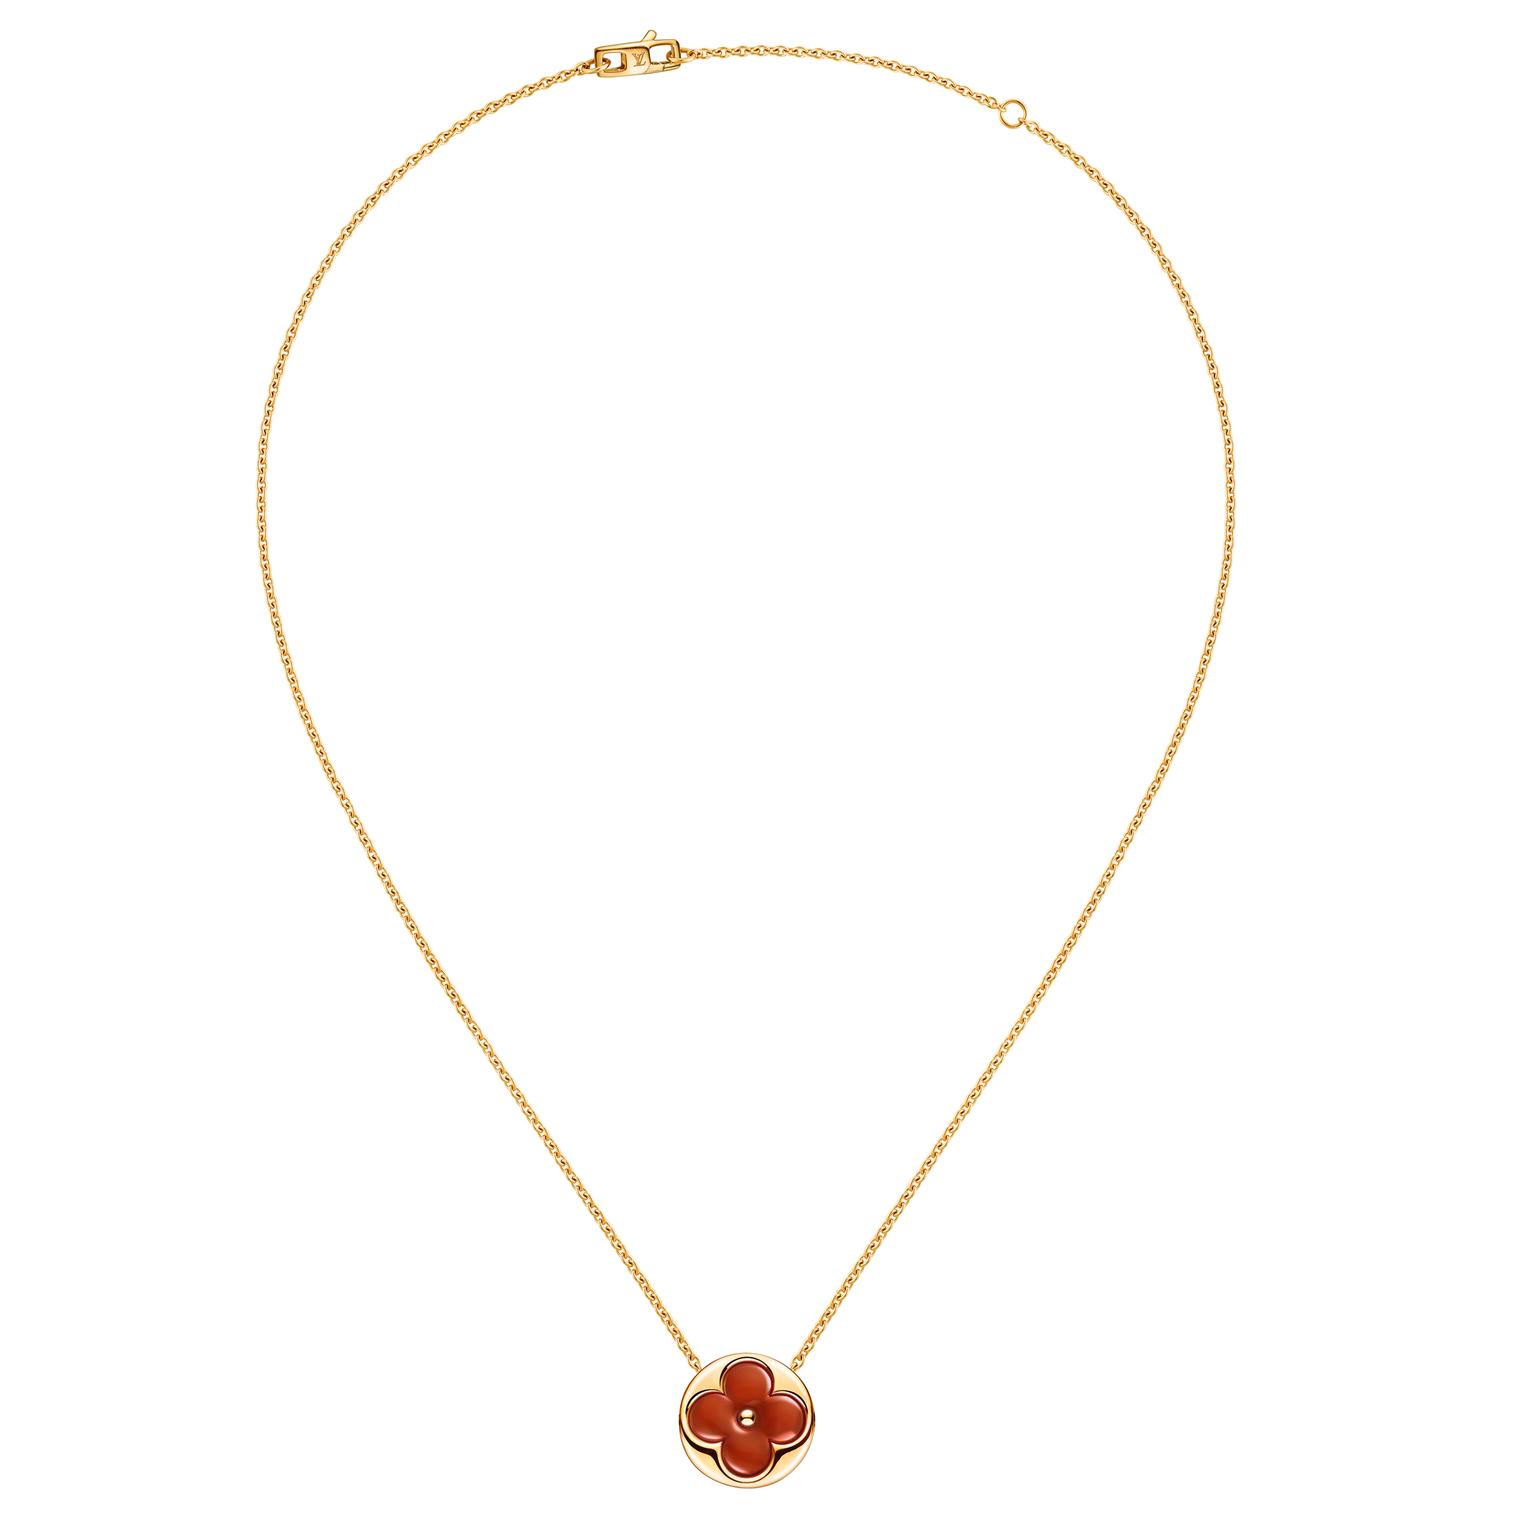 LOUIS VUITTON 18K Pink Gold Diamond Star Blossom Pendant Necklace 456112